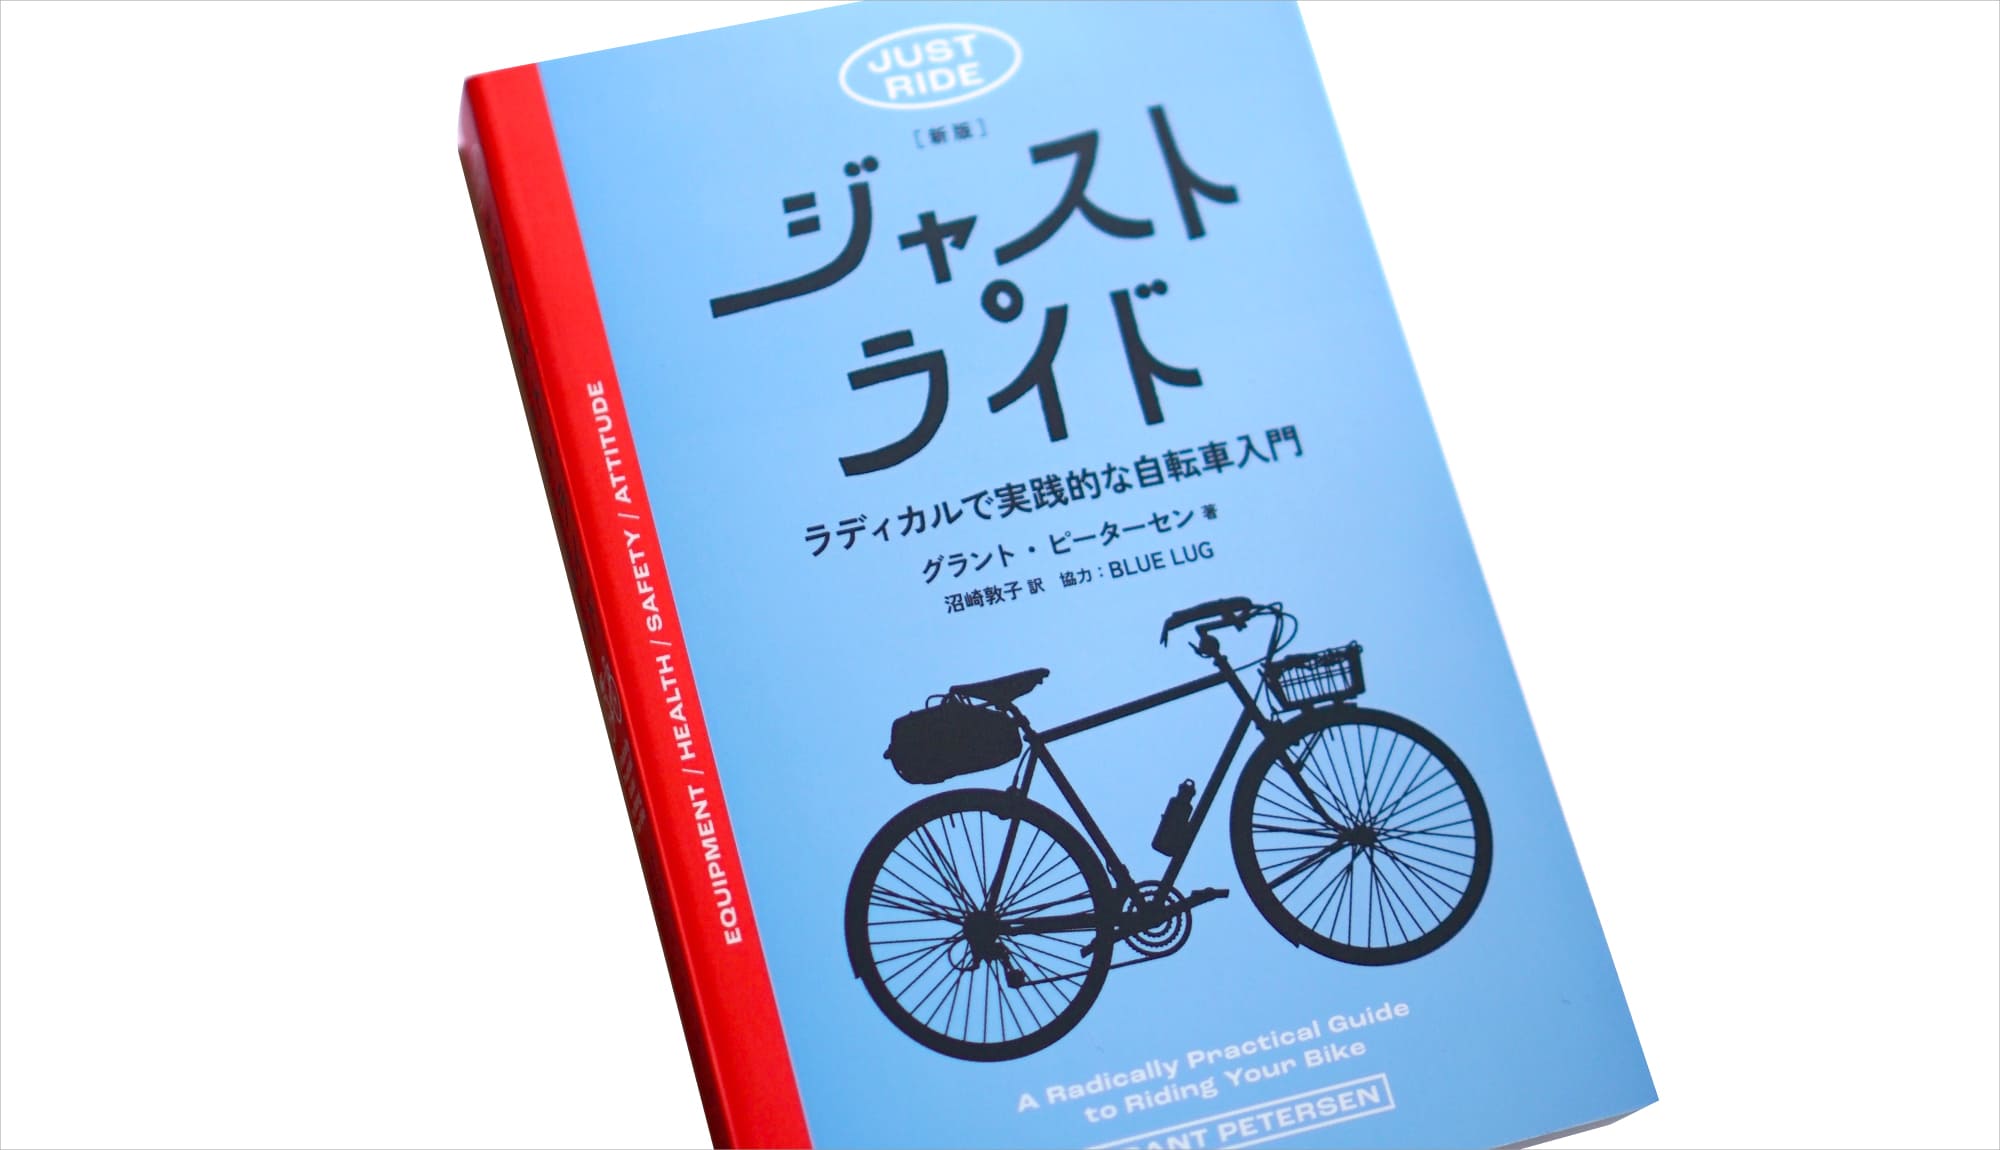 <span>サイクルおすすめBOOK　</span>米自転車界のカリスマによる熱いヴェロソフィ（自転車哲学）　「［新版］ ジャスト・ライド─ ラディカルで実践的な自転車入門」